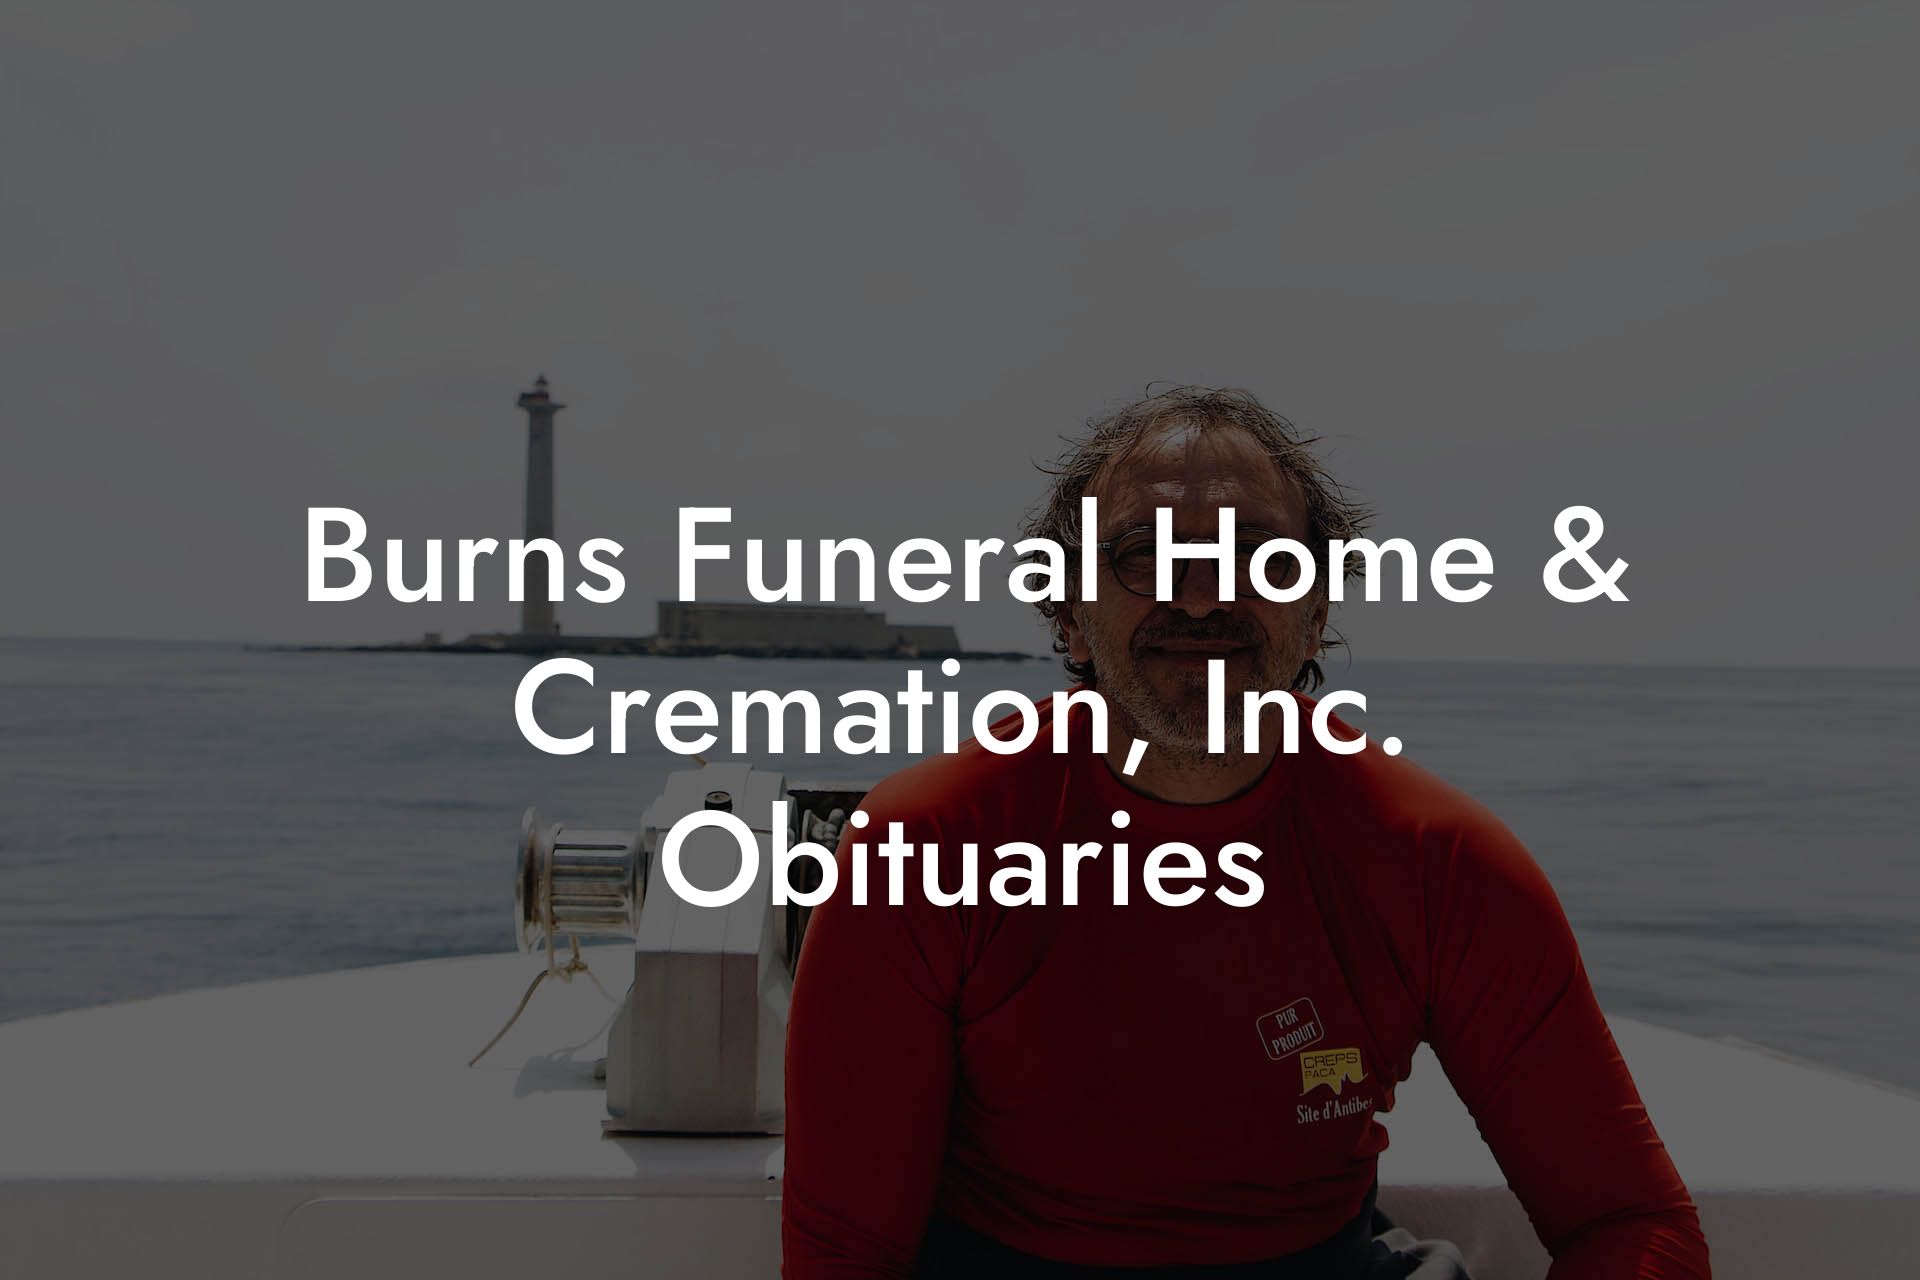 Burns Funeral Home & Cremation, Inc. Obituaries